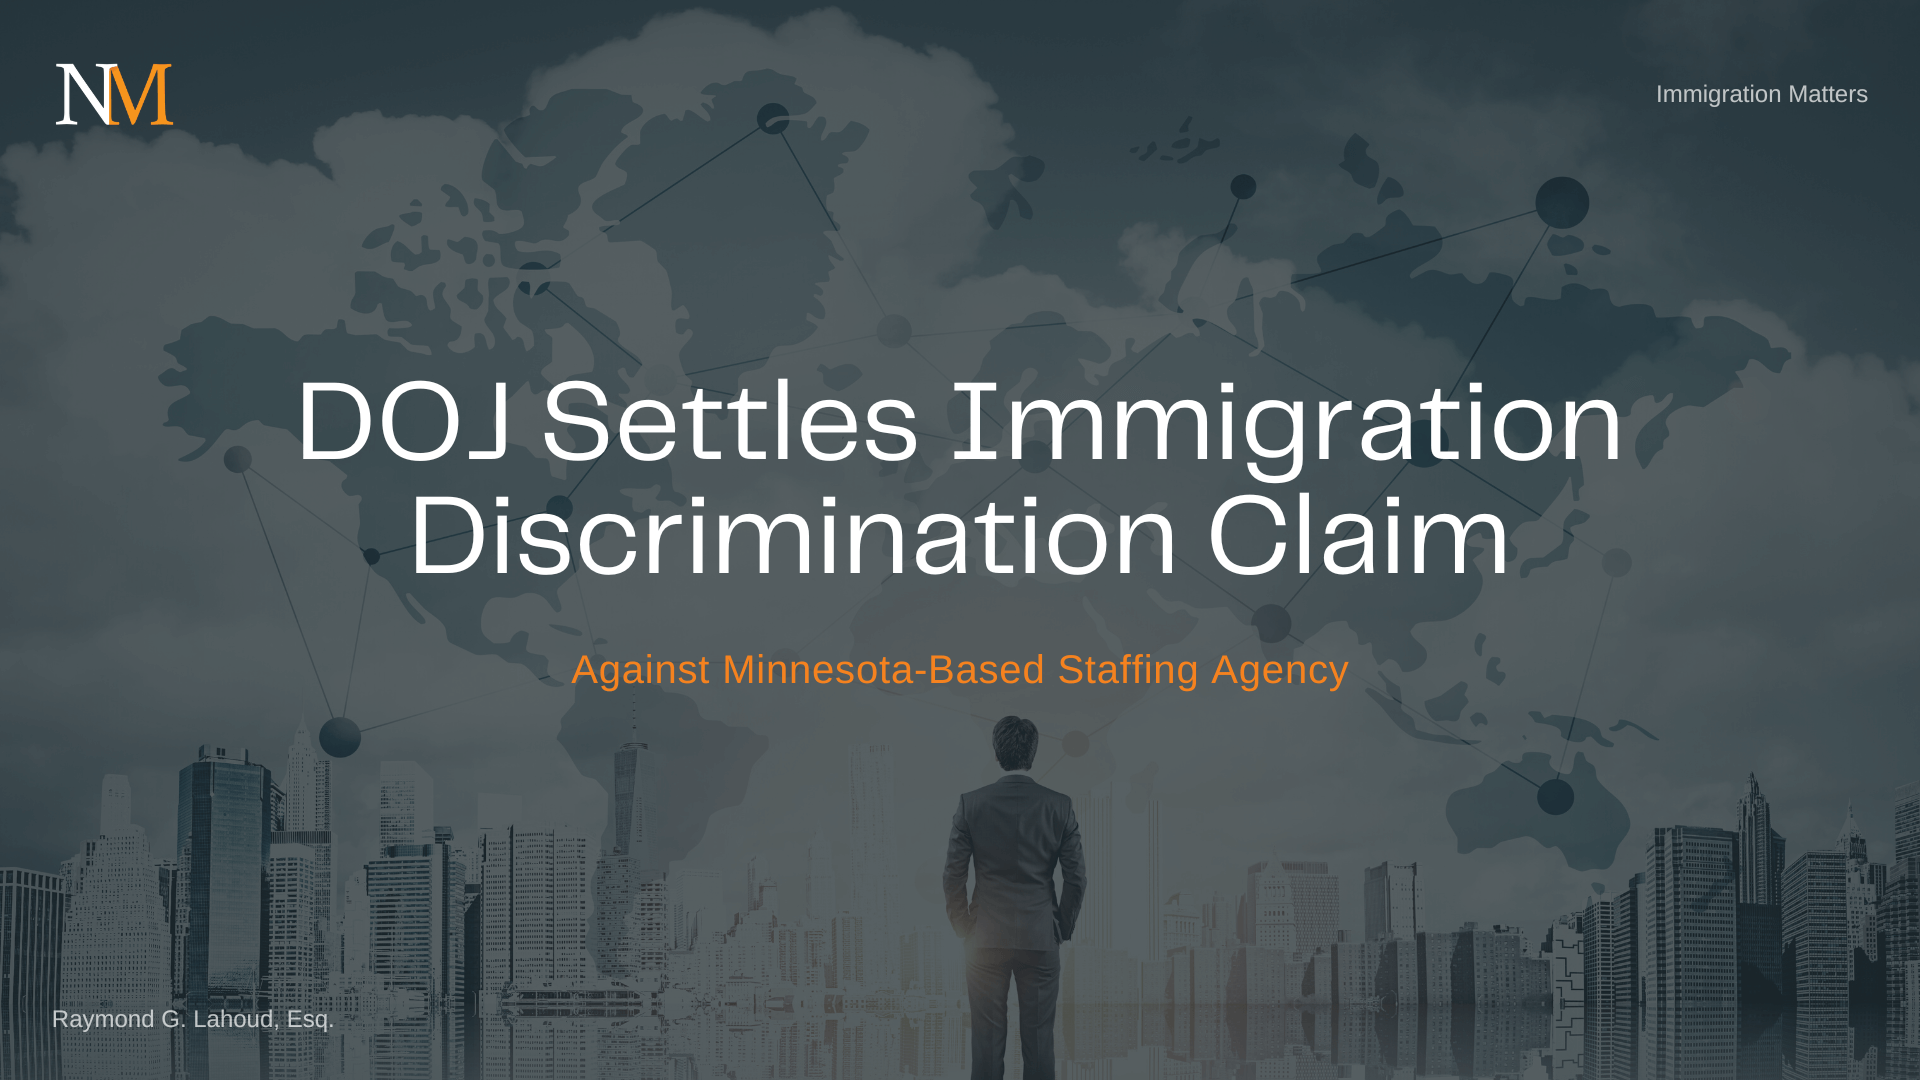 DOJ Settles Immigration Discrimination Claim Against Minnesota-Based Staffing Agency